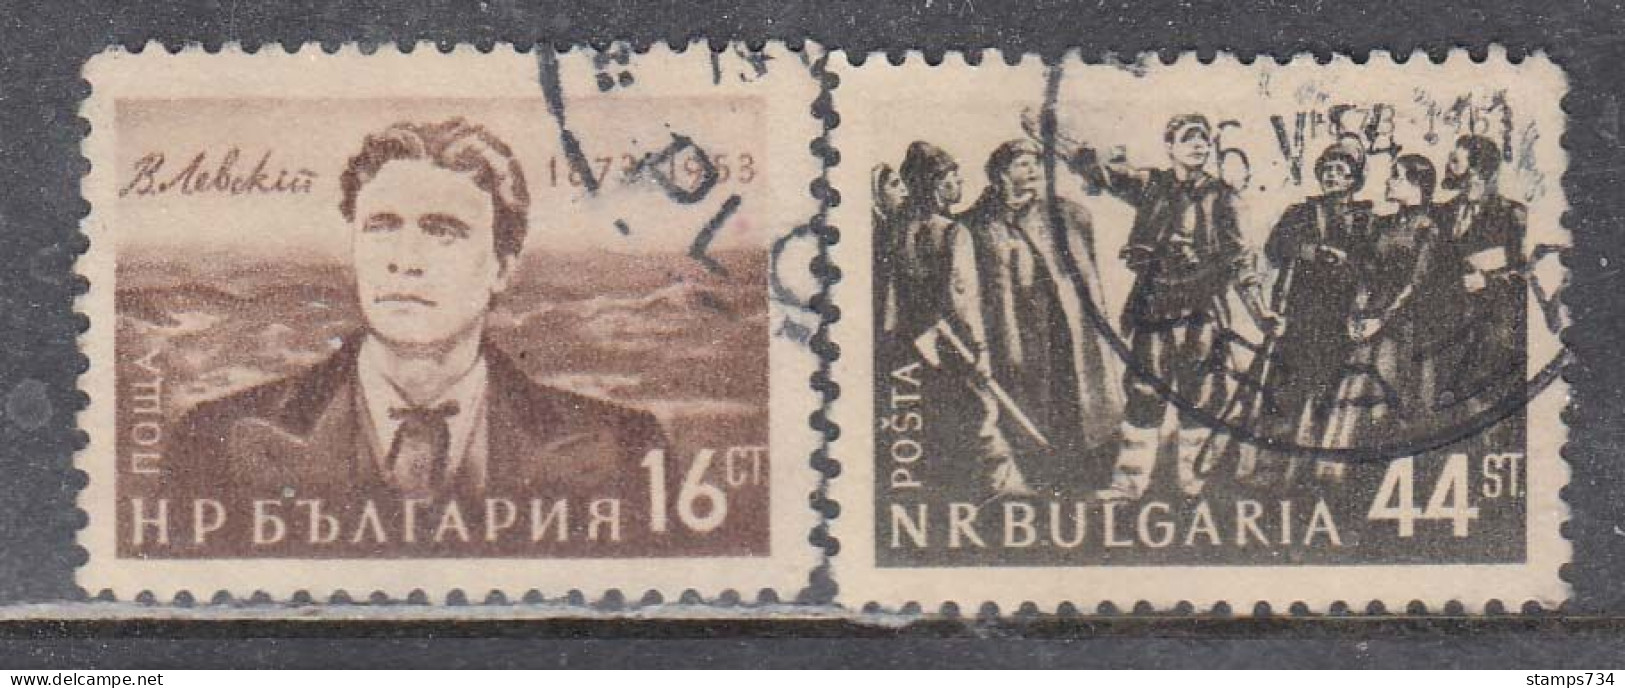 Bulgaria 1953 - 80th Anniversary Of The Death Of Vasil Levski, Mi-Nr. 844/45, Used - Gebraucht